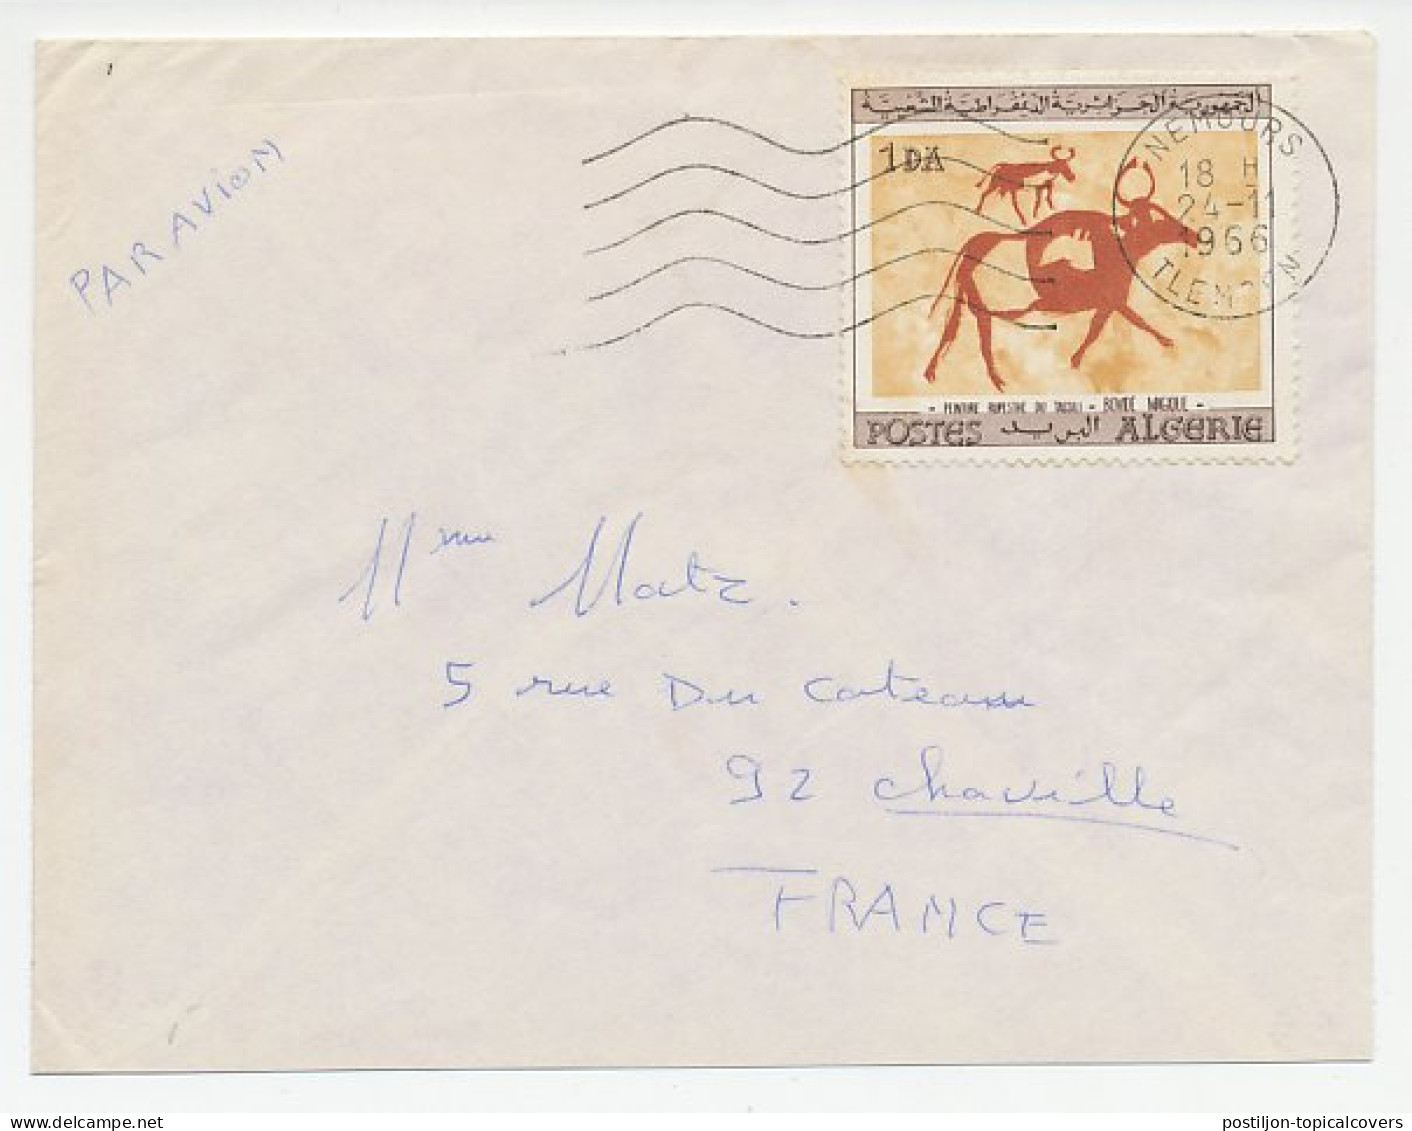 Cover / Postmark Algeria 1966 Rock Drawings - Tassili - Préhistoire